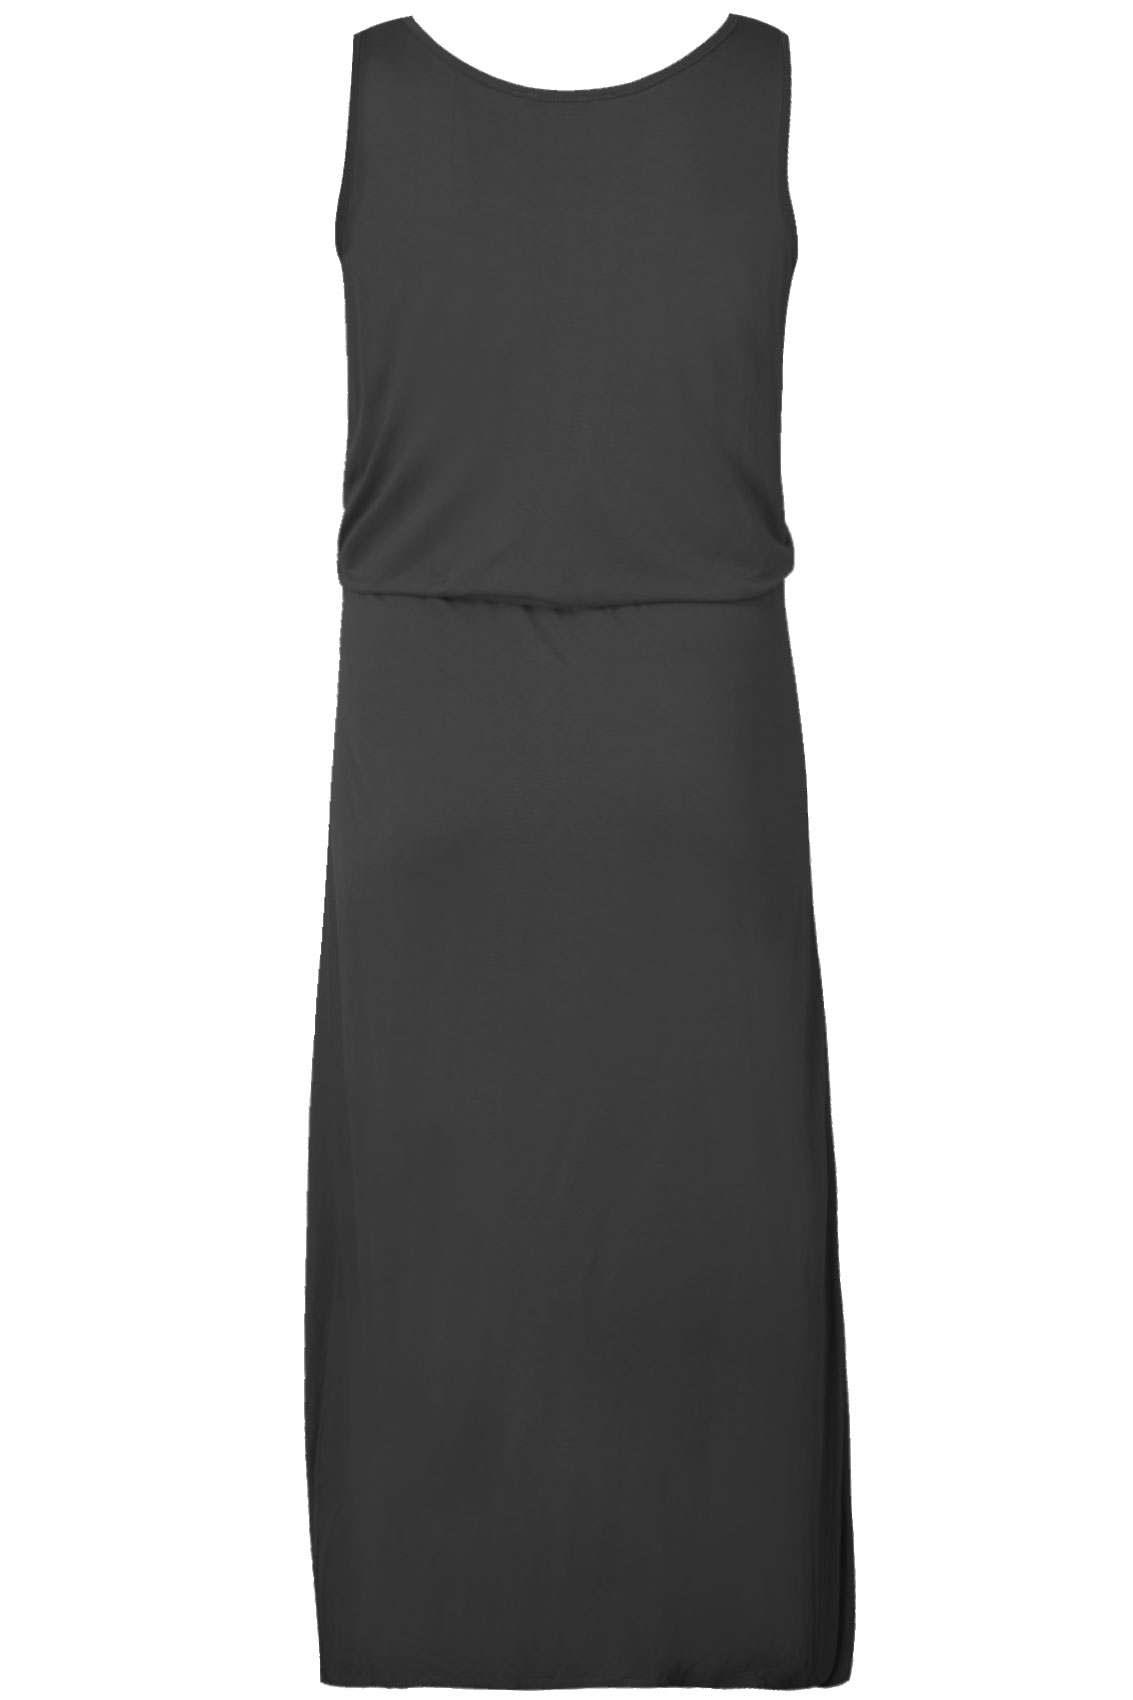 Black Sleeveless Jersey Maxi Dress plus size 16,18,20,22,24,26,28,30,32